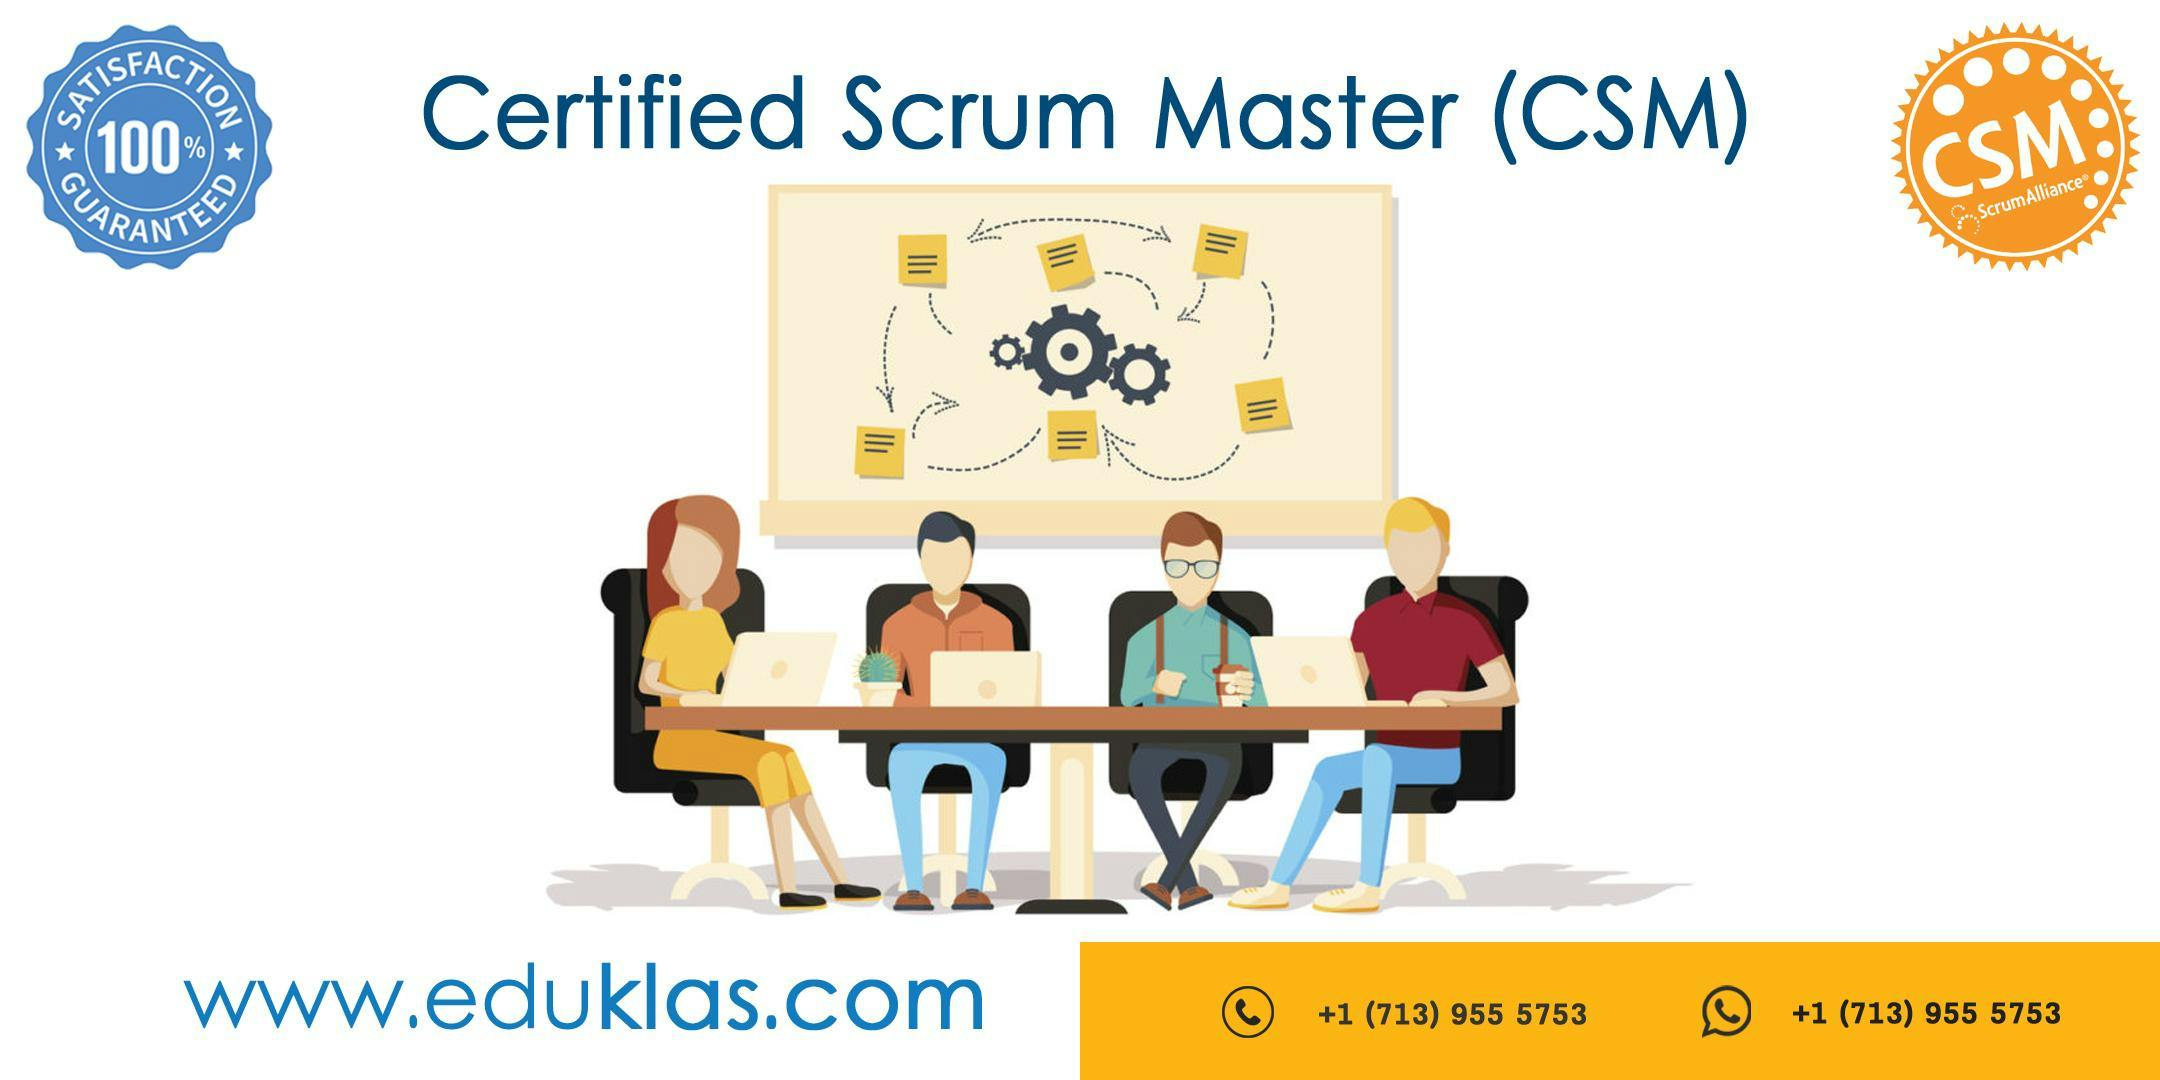 Scrum Master Certification | CSM Training | CSM Certification Workshop | Certified Scrum Master (CSM) Training in Allen, TX | Eduklas